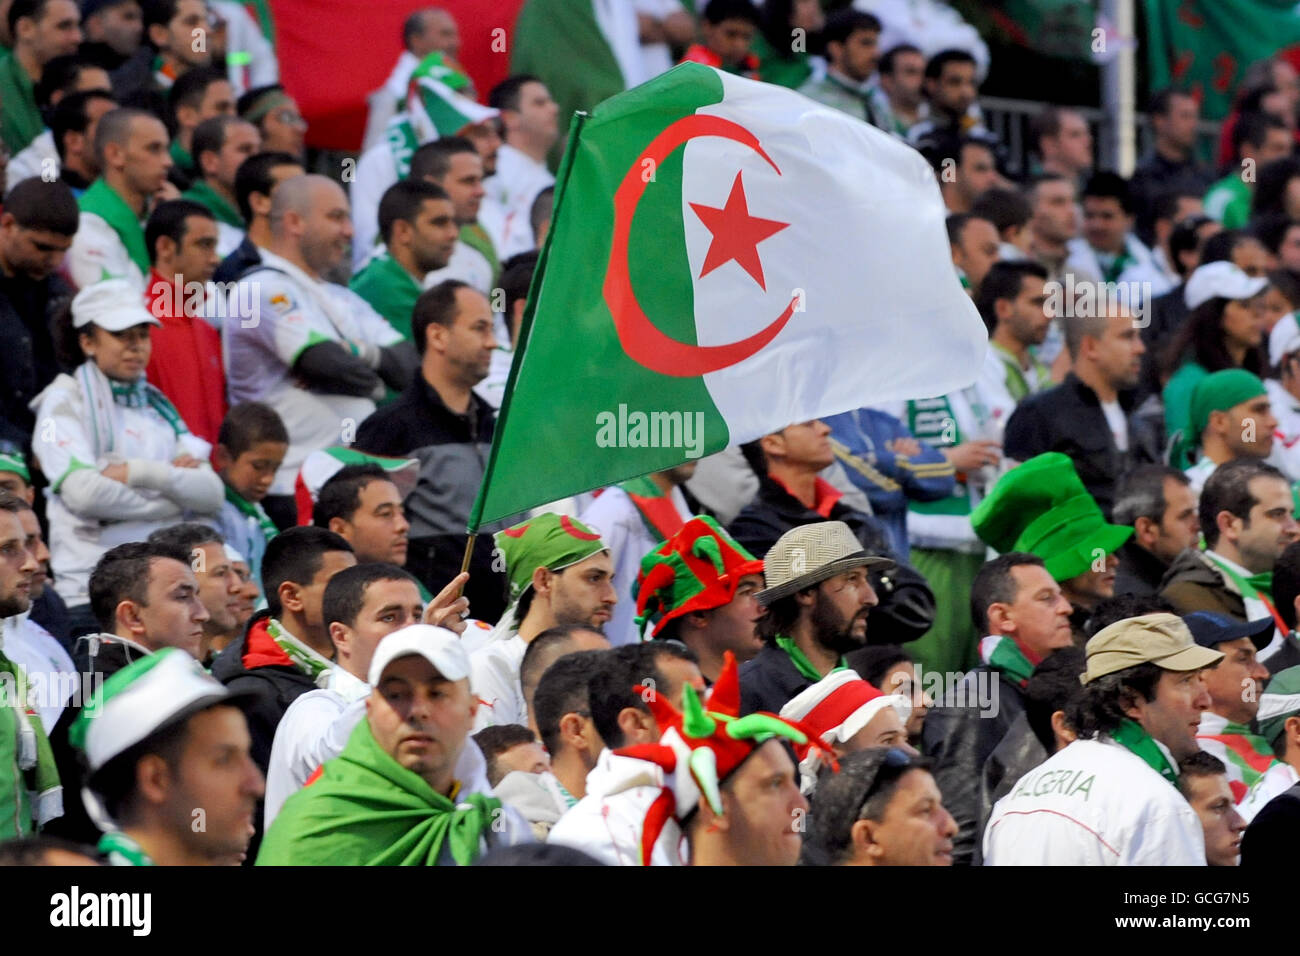 Soccer - International Friendly - Republic of Ireland v Algeria - RDS Stadium. Algeria fans in the stands. Stock Photo